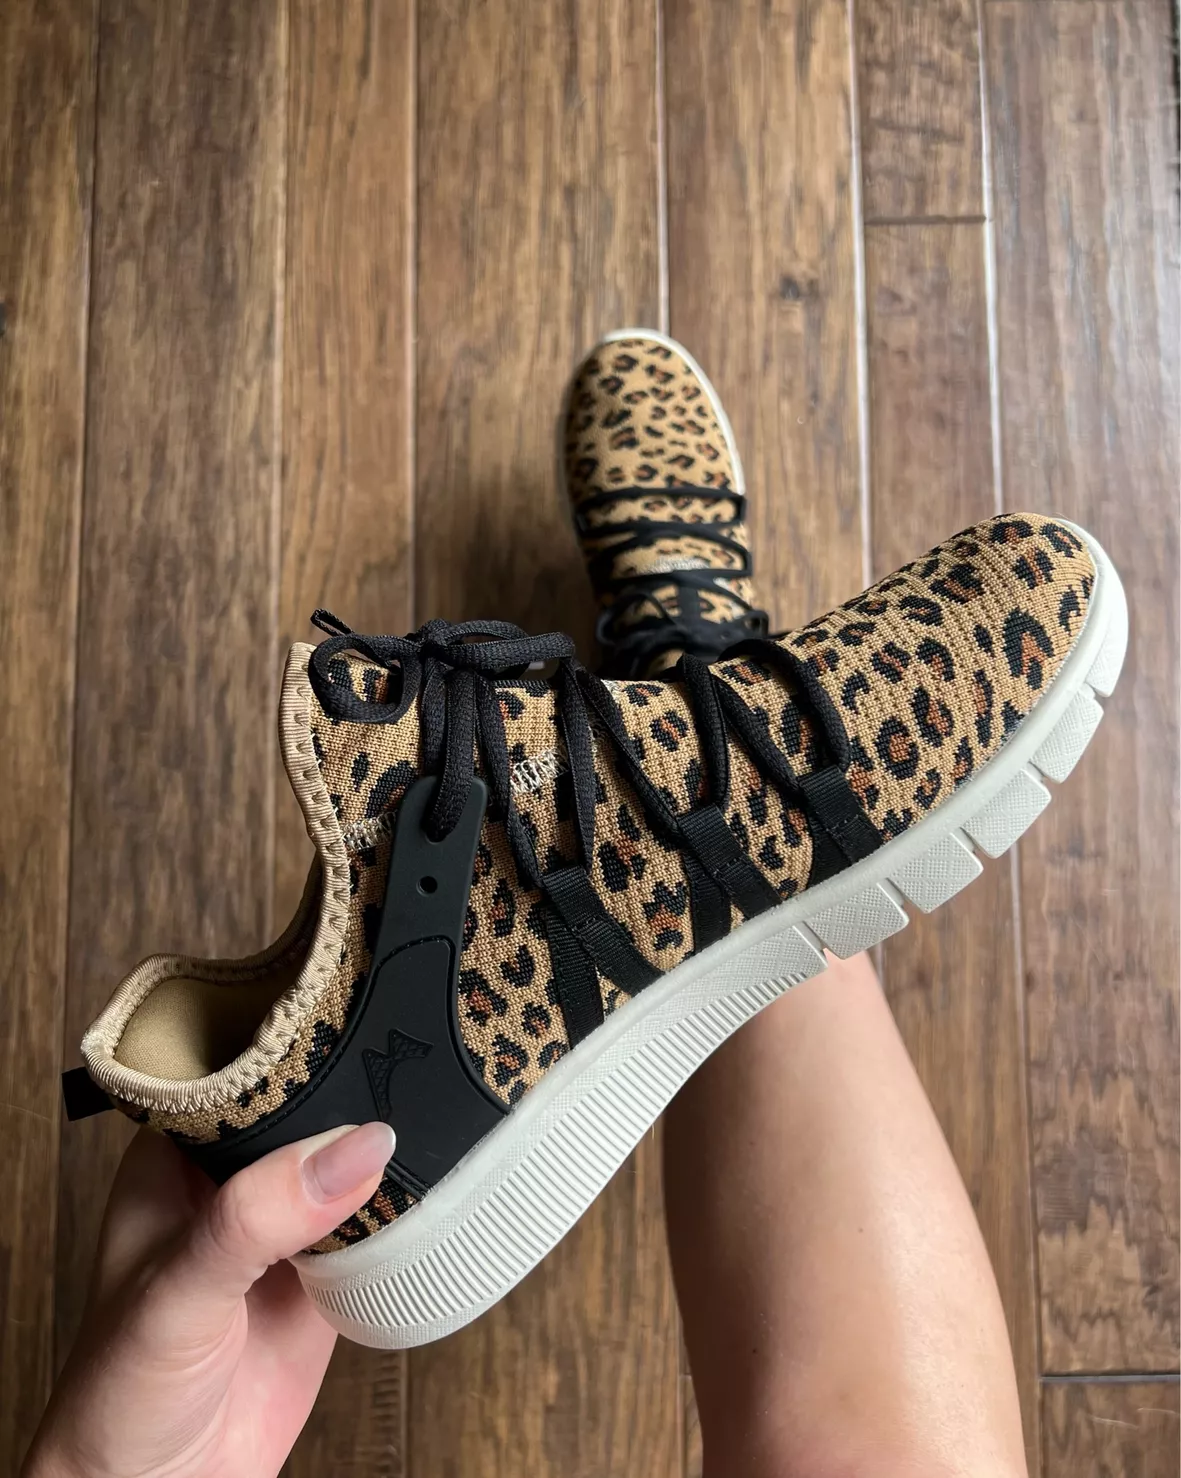 SAHM Style: Cheetah Leggings